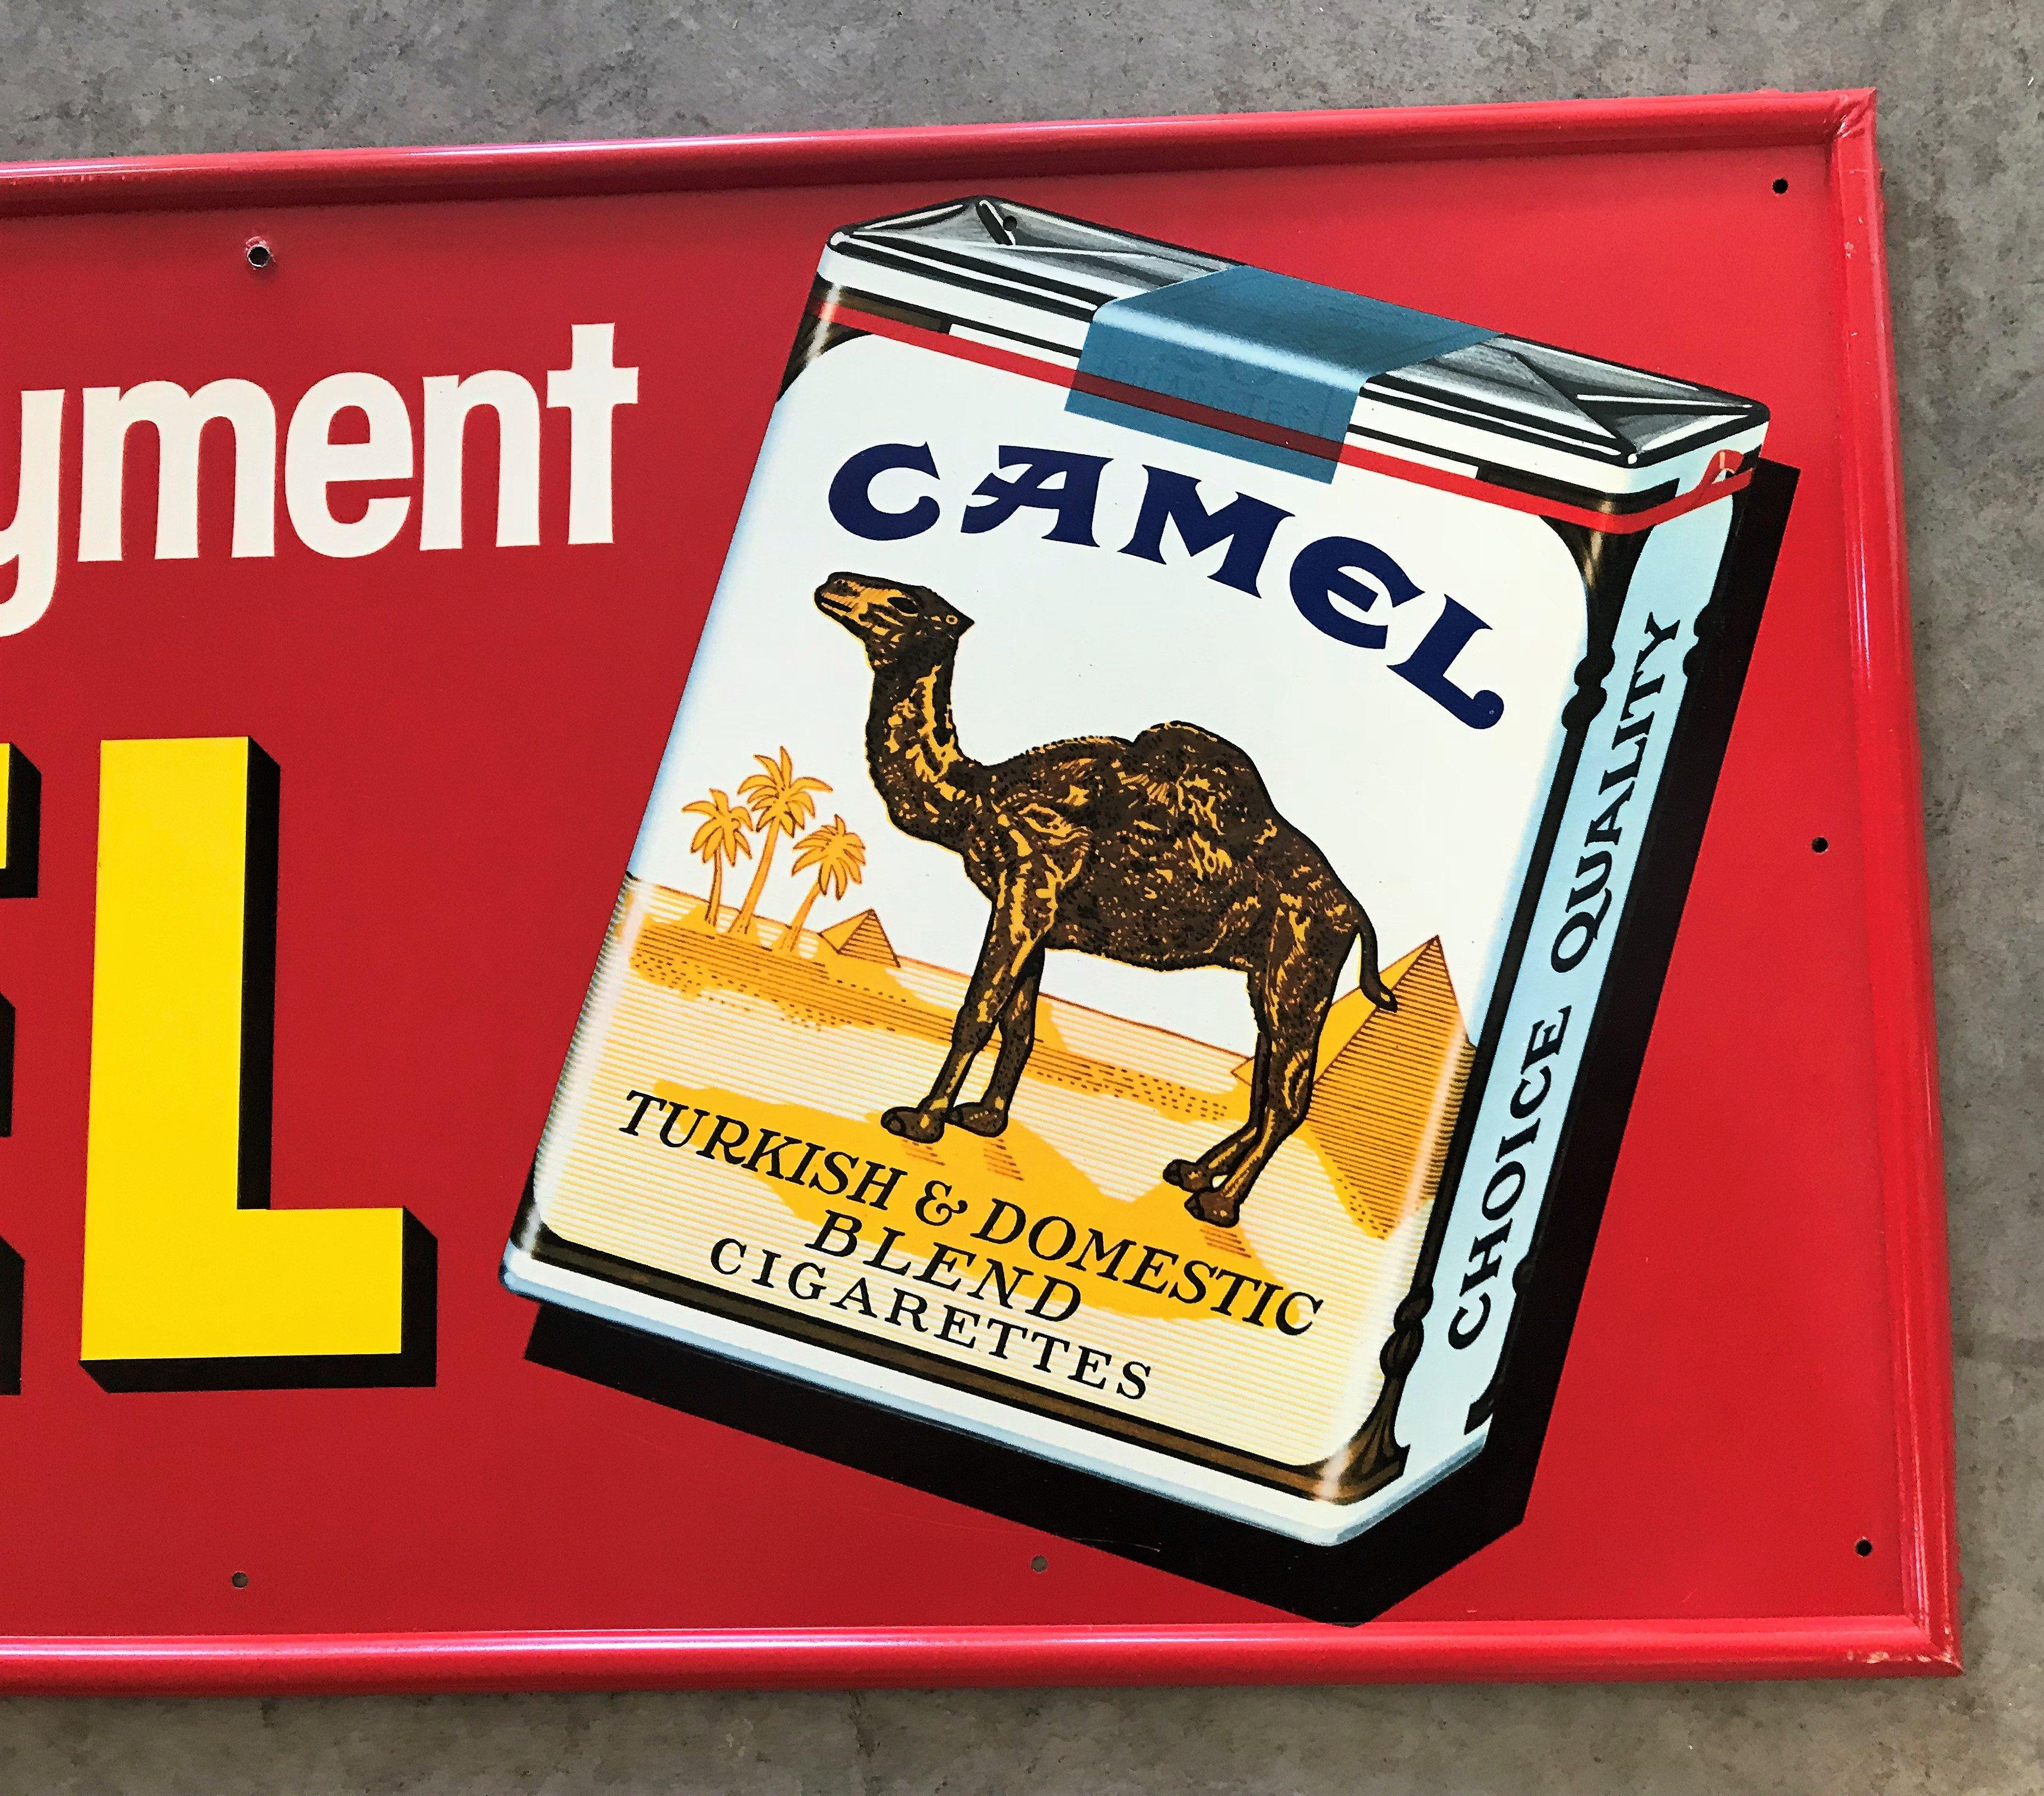 Camel Cigarette Advertisement